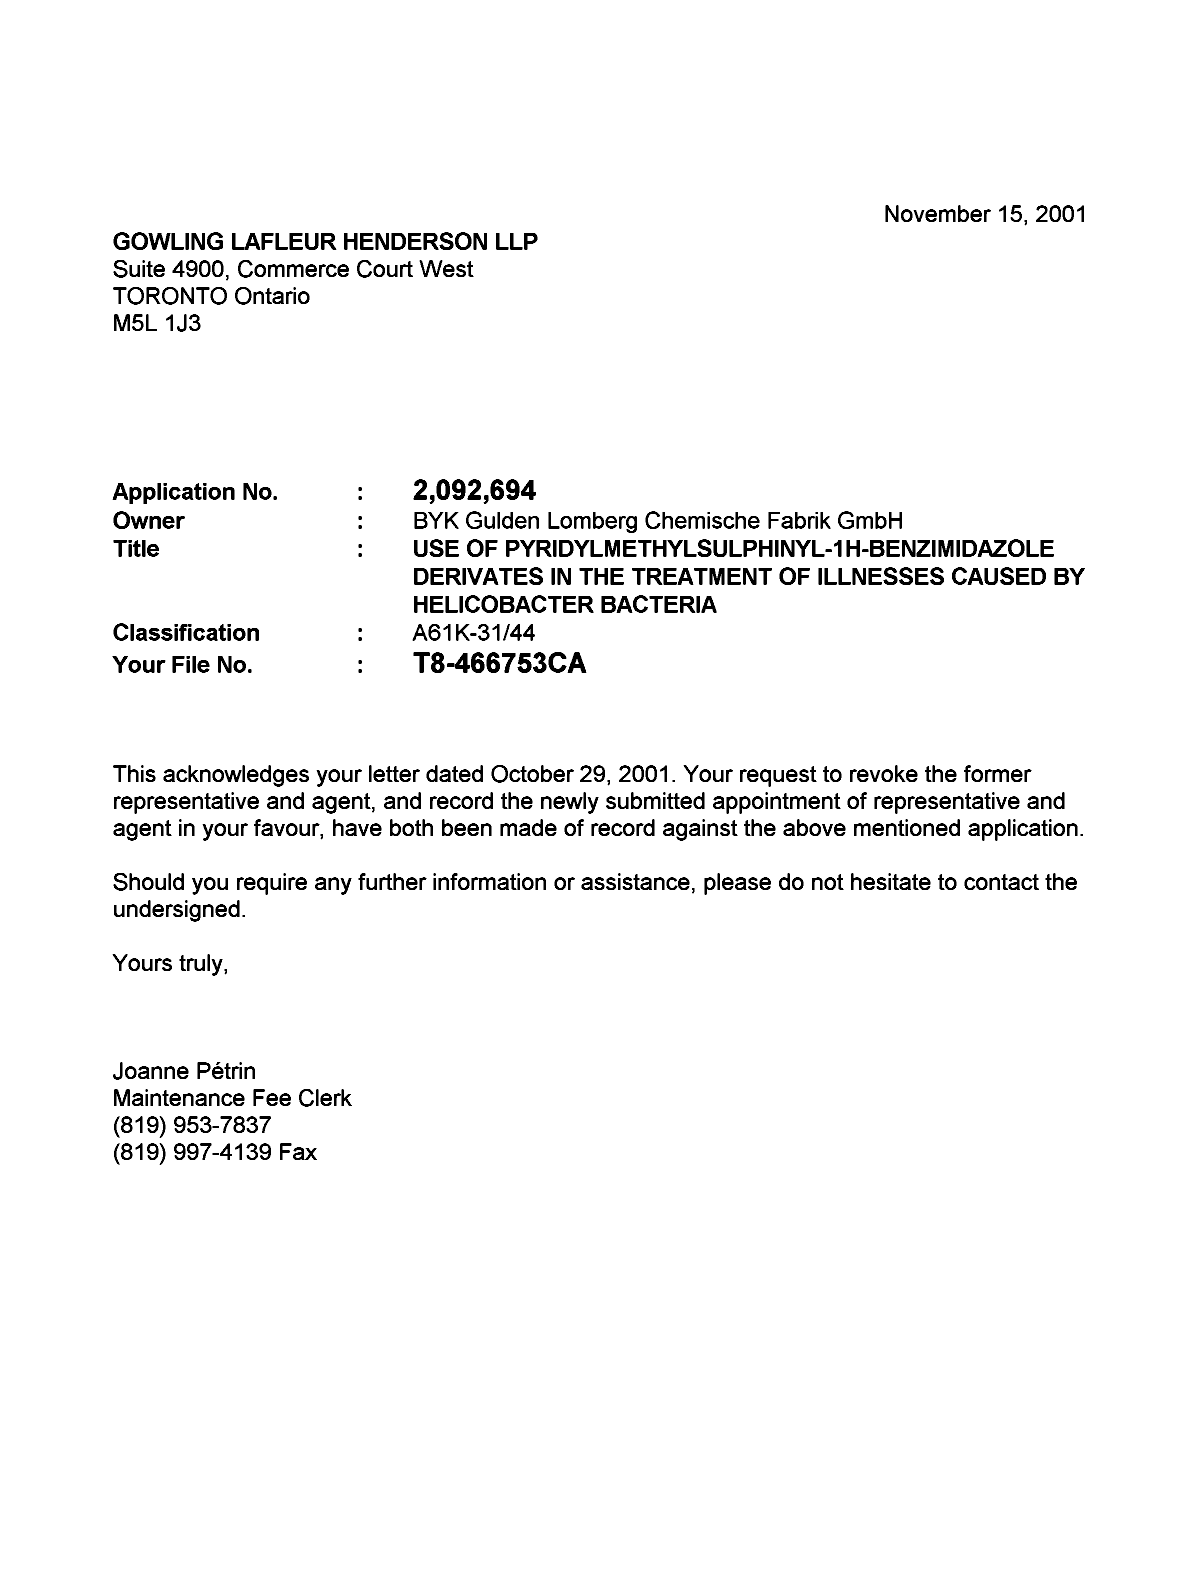 Canadian Patent Document 2092694. Correspondence 20001215. Image 1 of 1